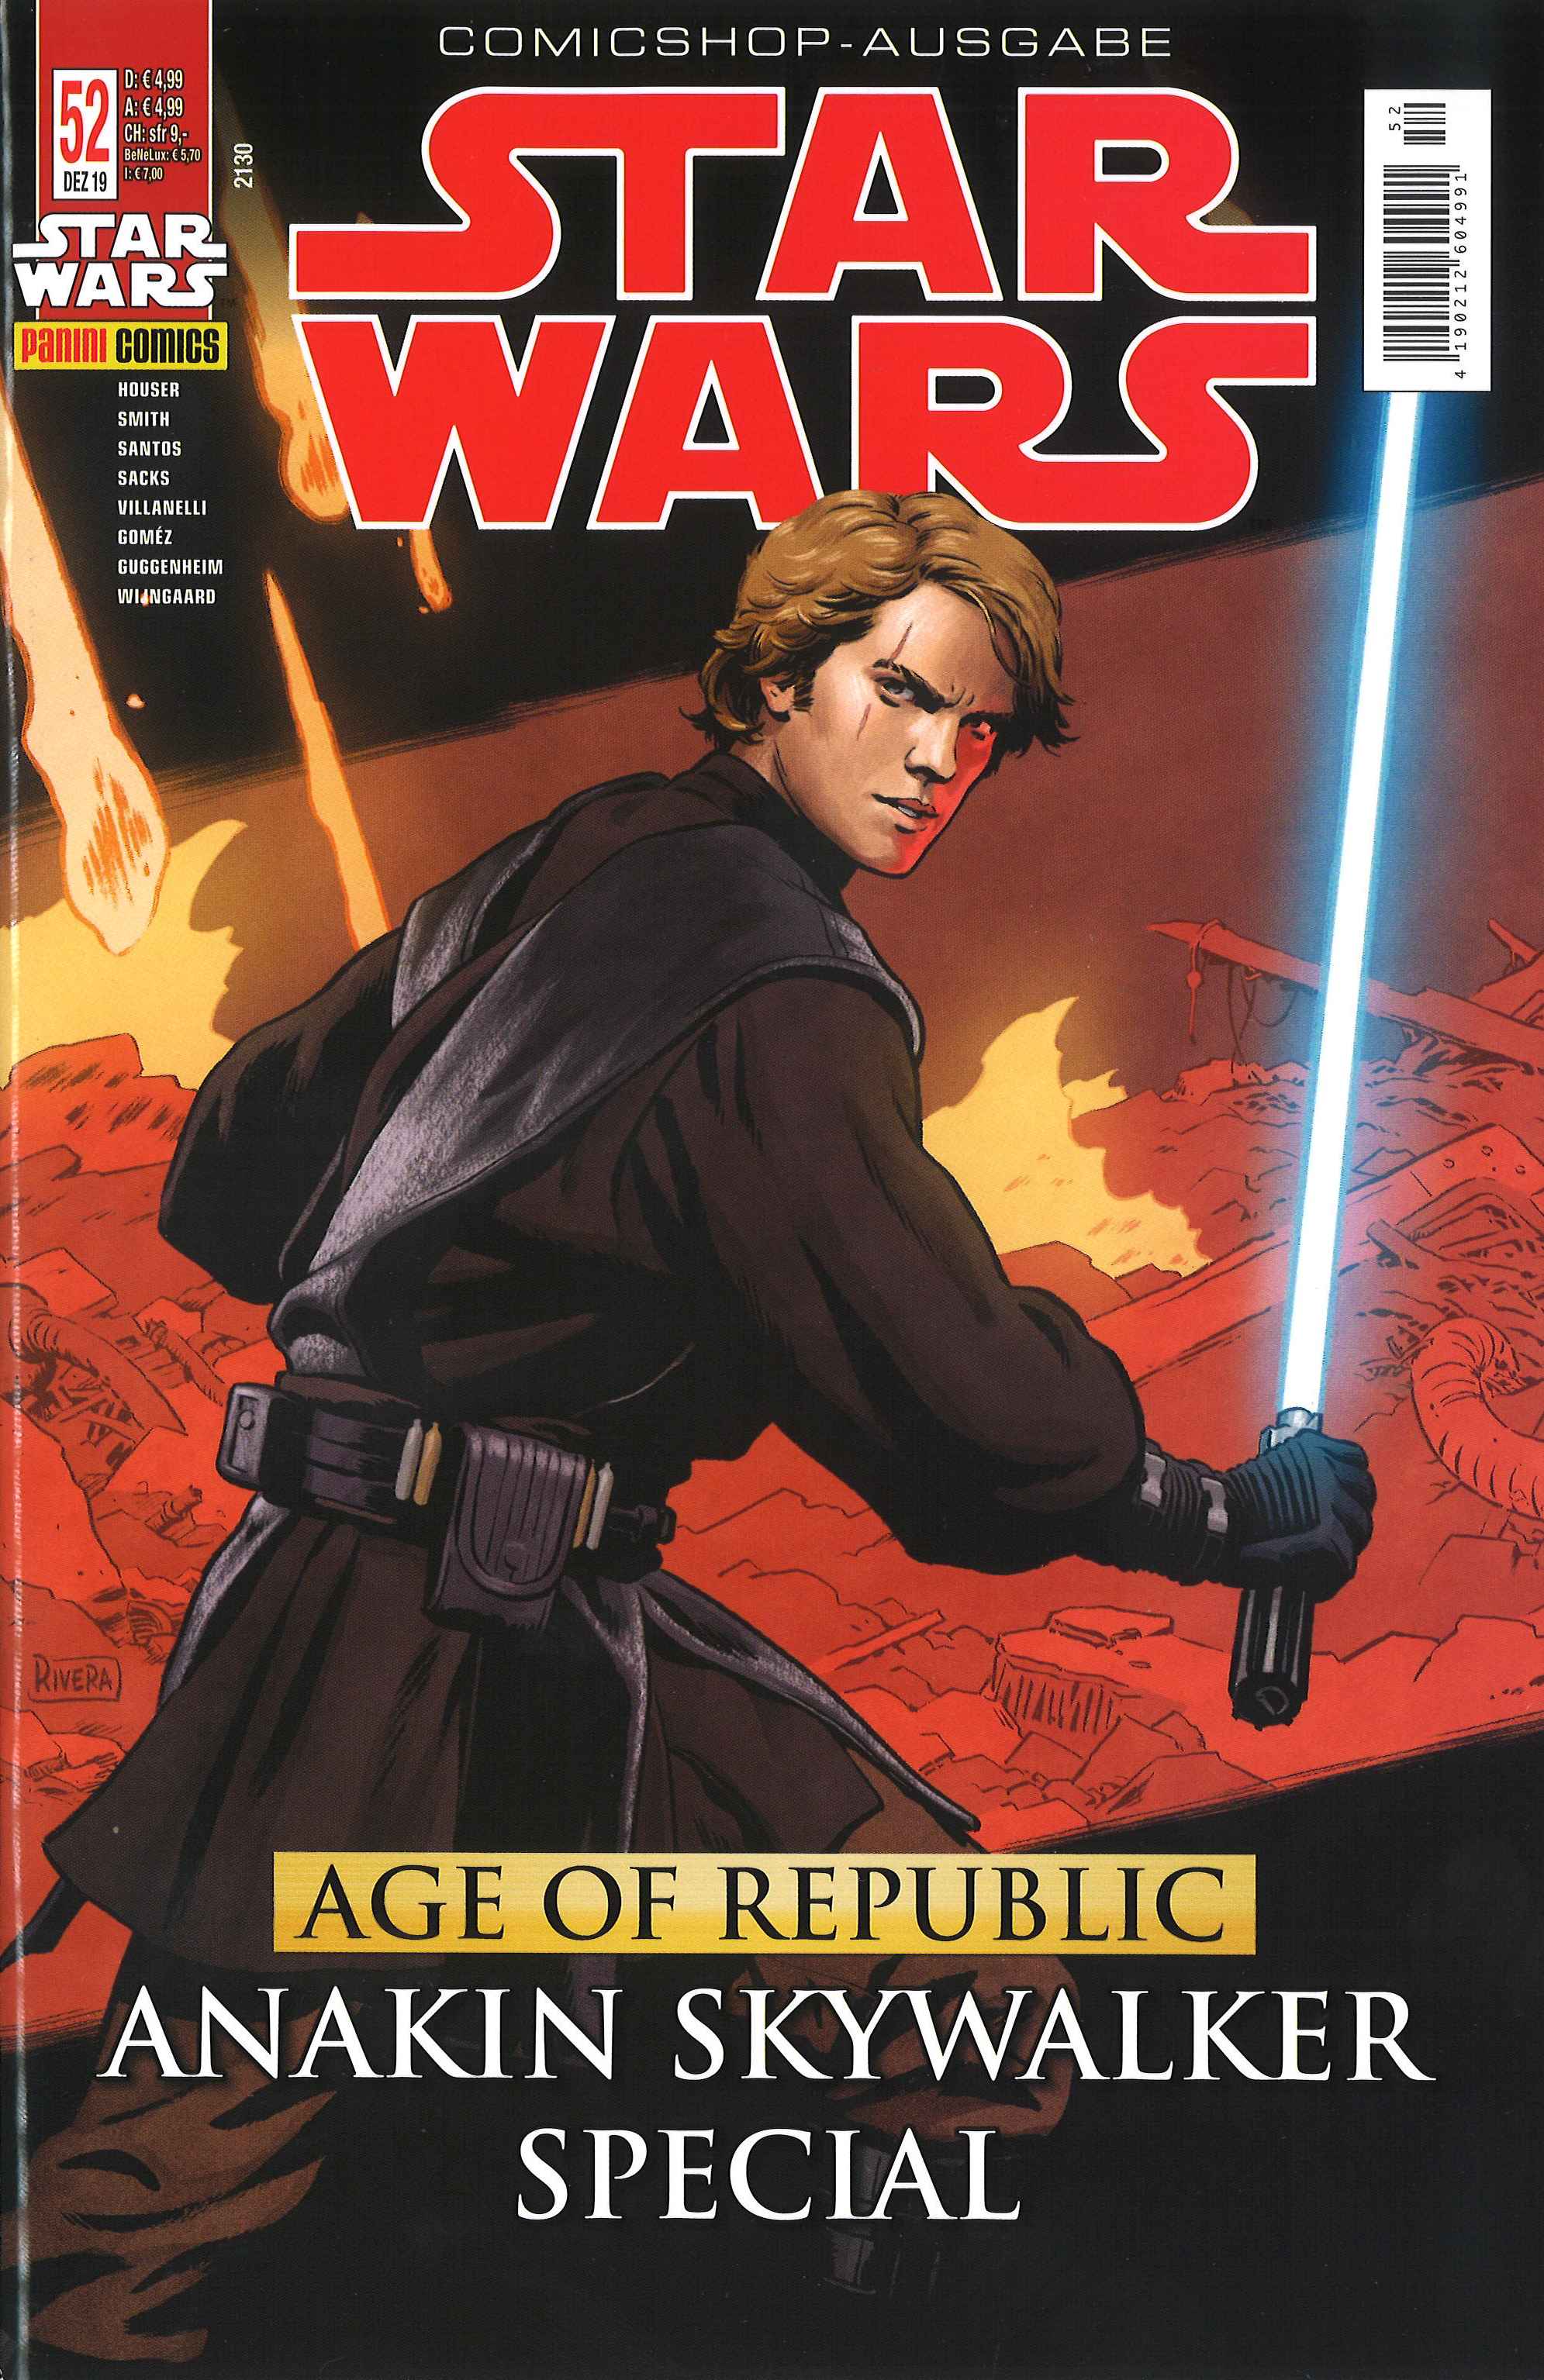 STAR WARS AGE OF REPUBLIC ANAKIN SKYWALKER #1 RIVERA COVER MARVEL COMICS